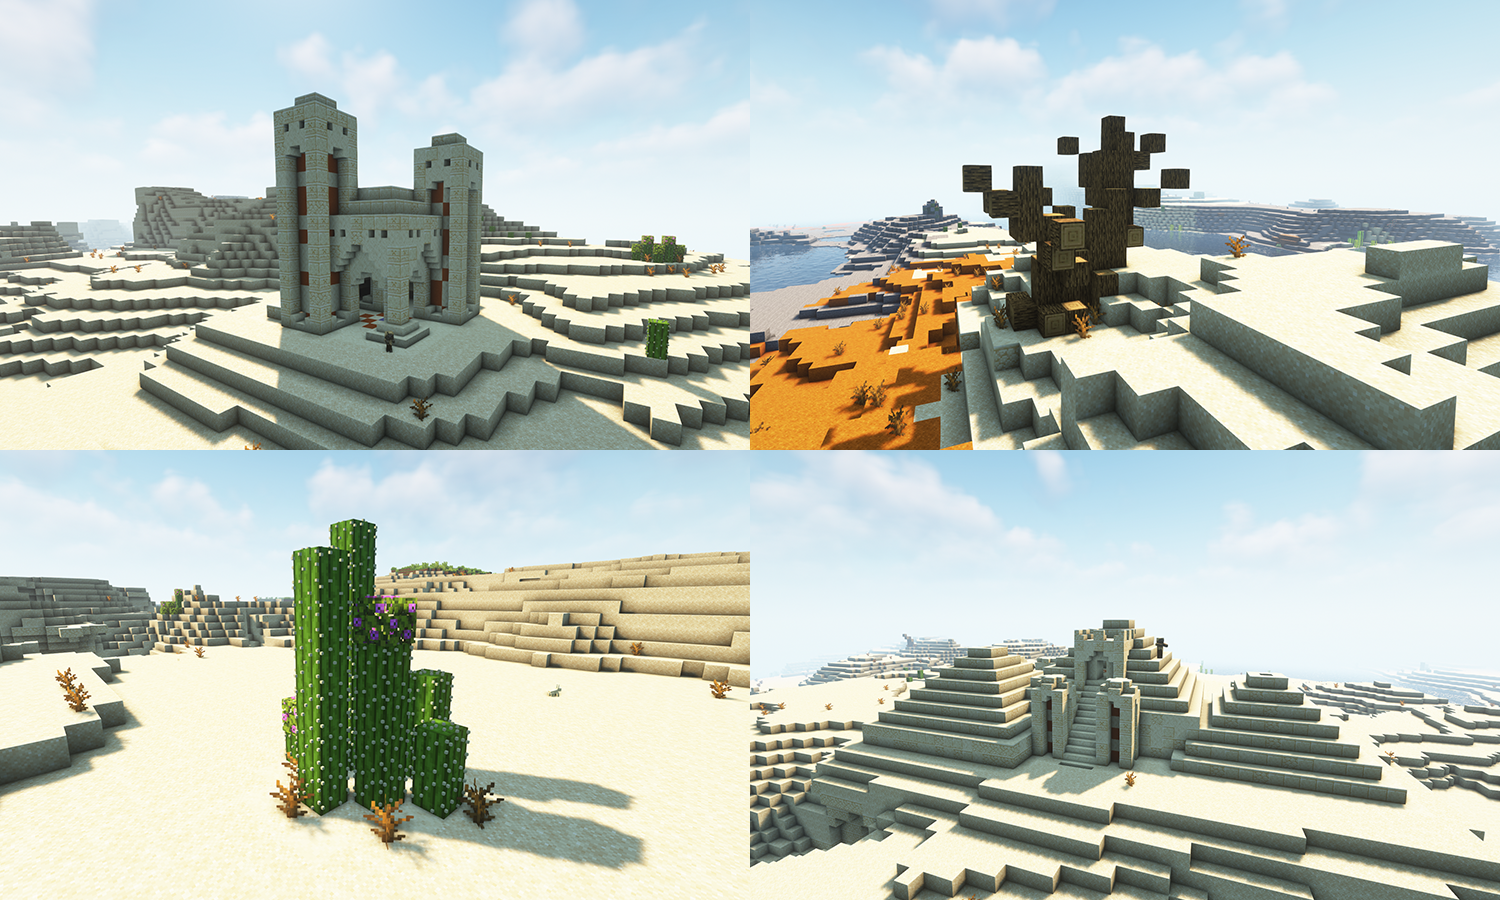 Desert structures